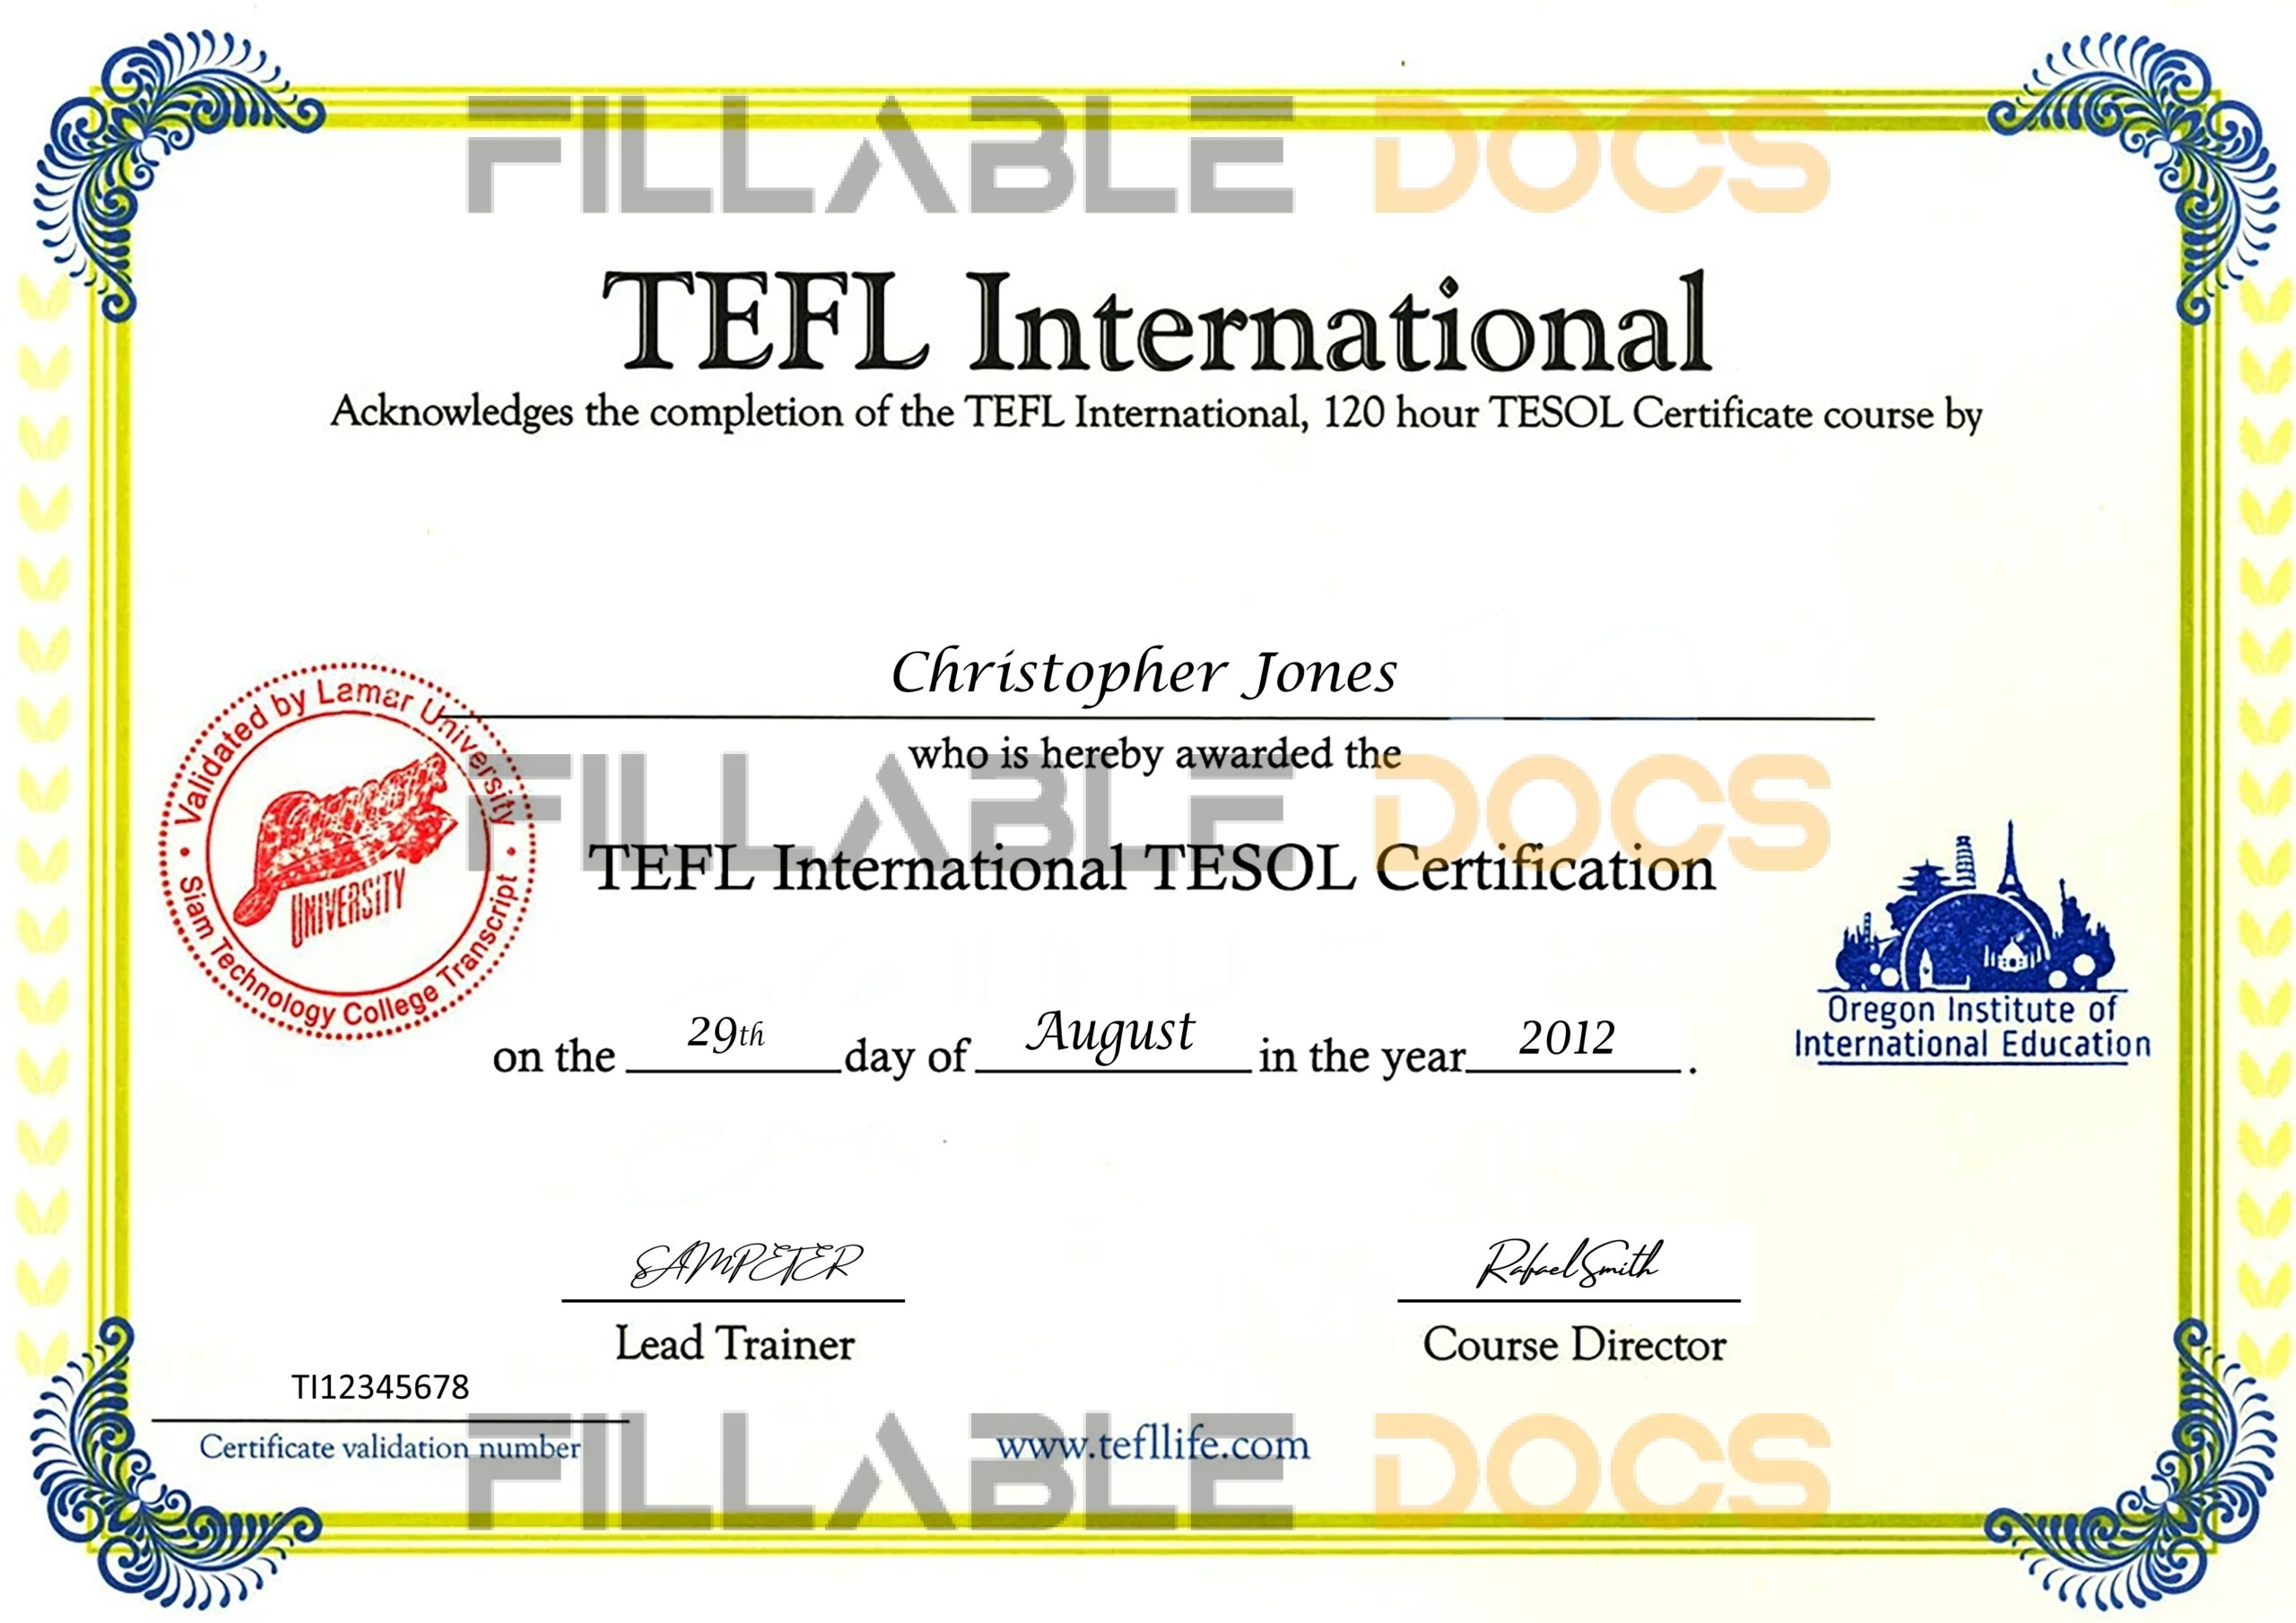 Teflife TEFL Certificate PSD Template